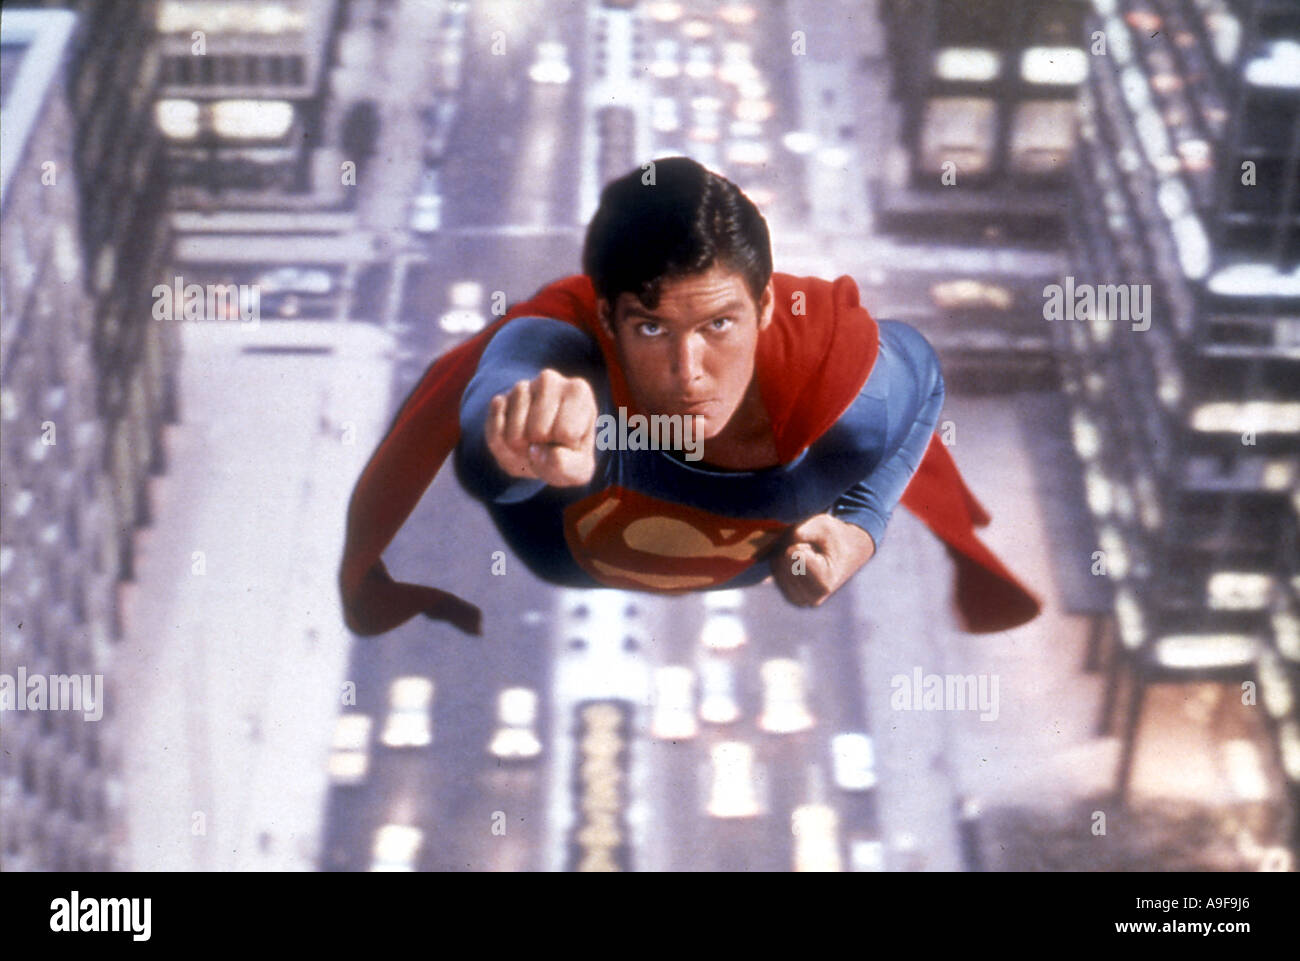 Superman Flying Pose 2 PNG Transparent by happymarjam on DeviantArt